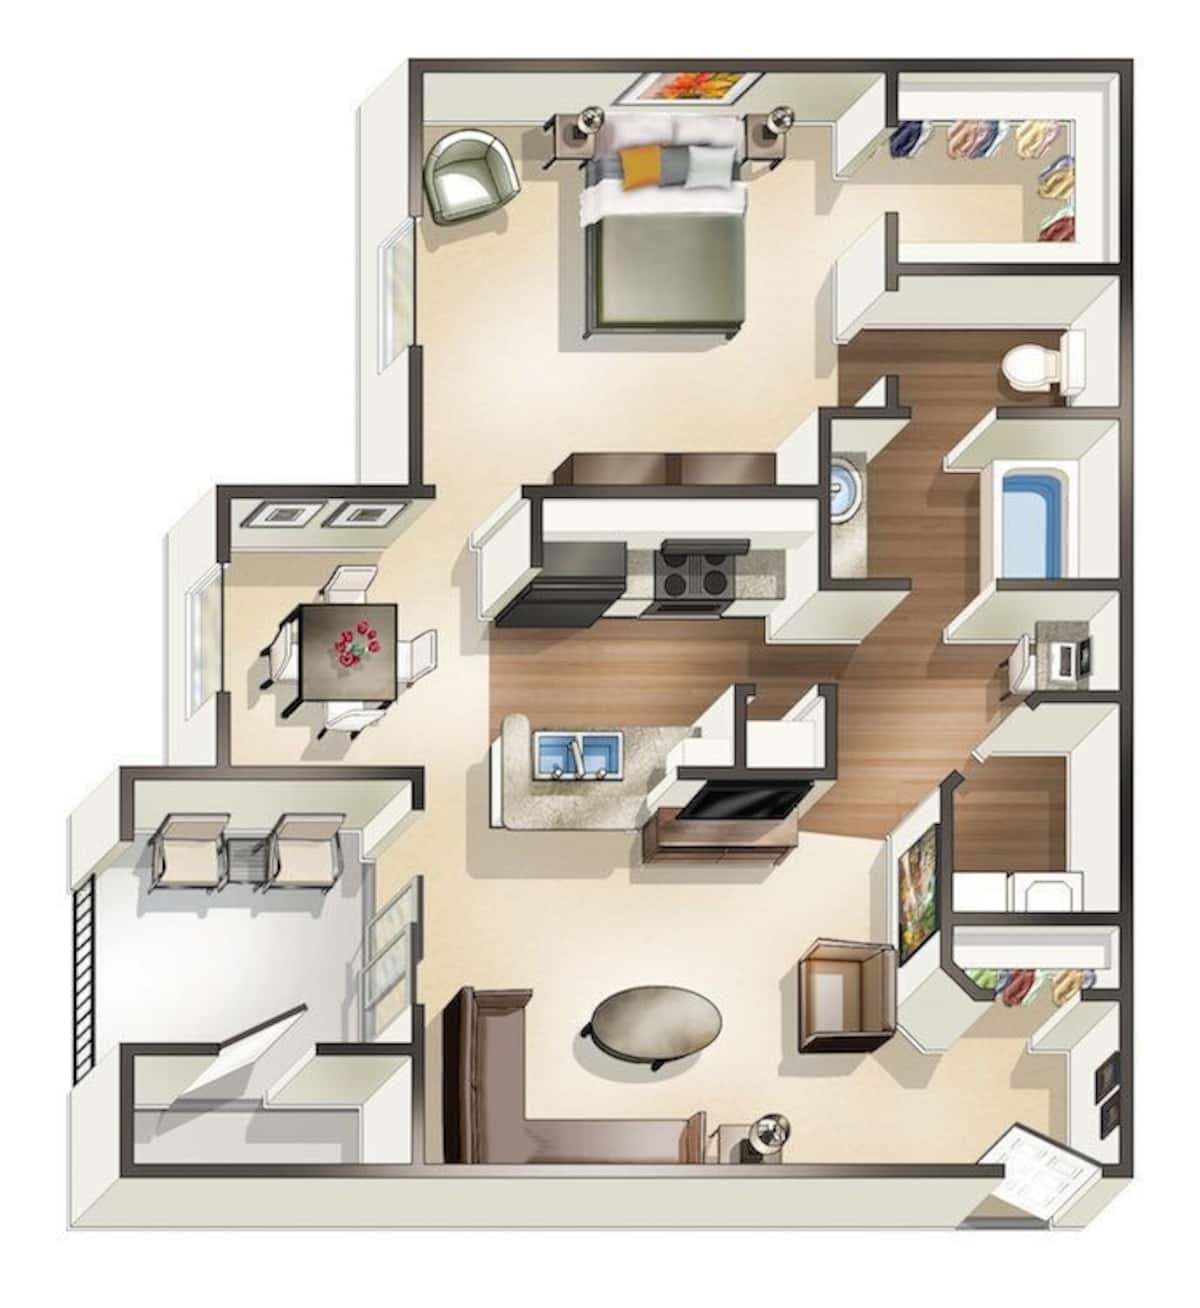 Floorplan diagram for A1CS, showing 1 bedroom